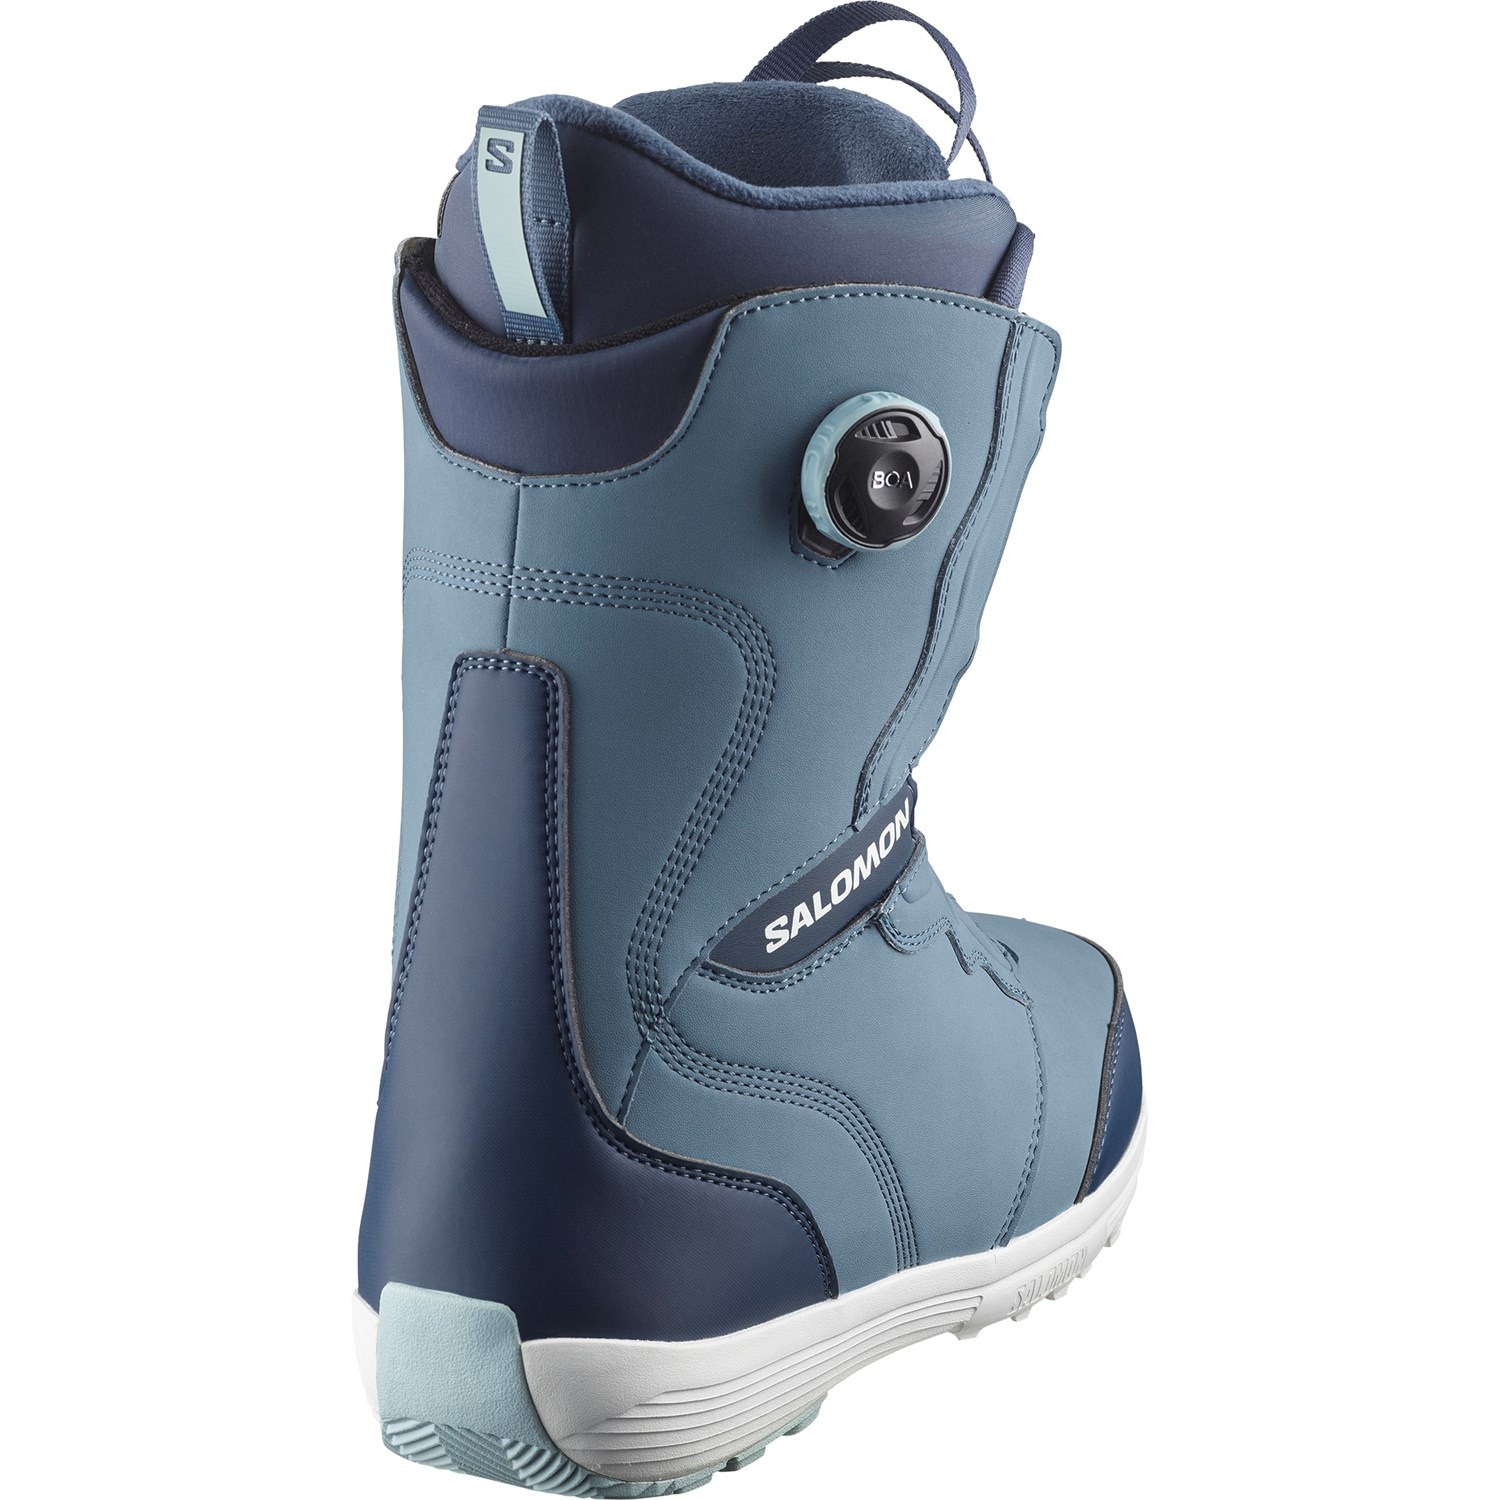 Salomon Ivy Boa SJ Snowboard Boots - Women's | evo